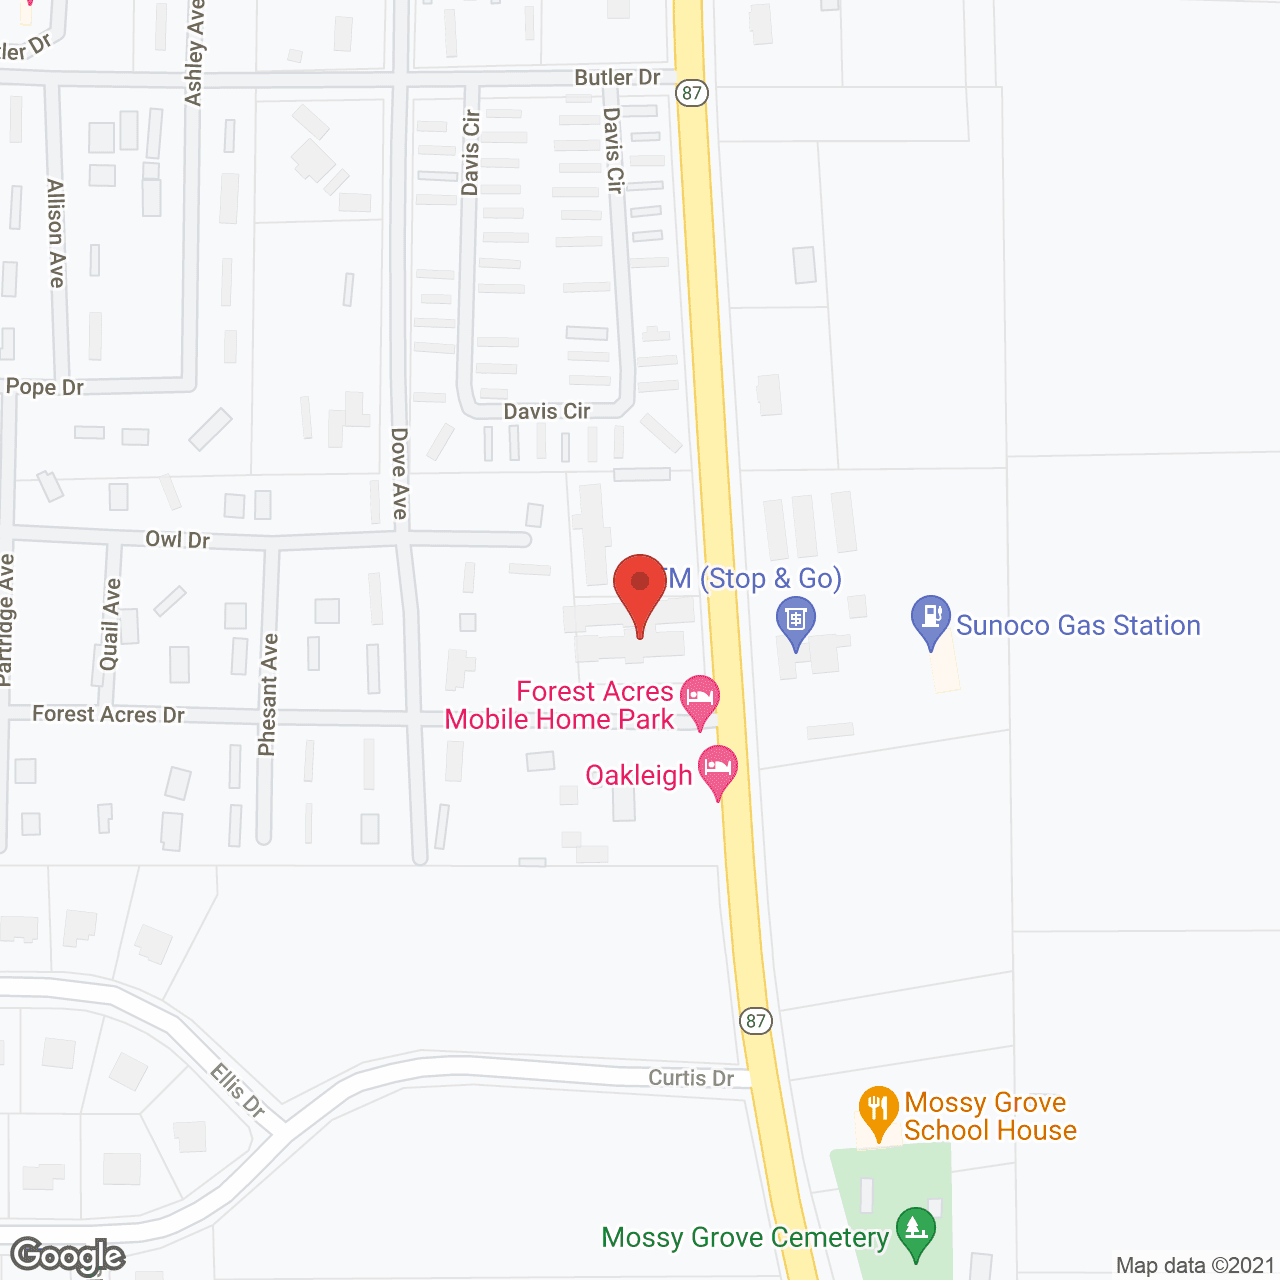 Magnolia Wood Lodge II and III in google map